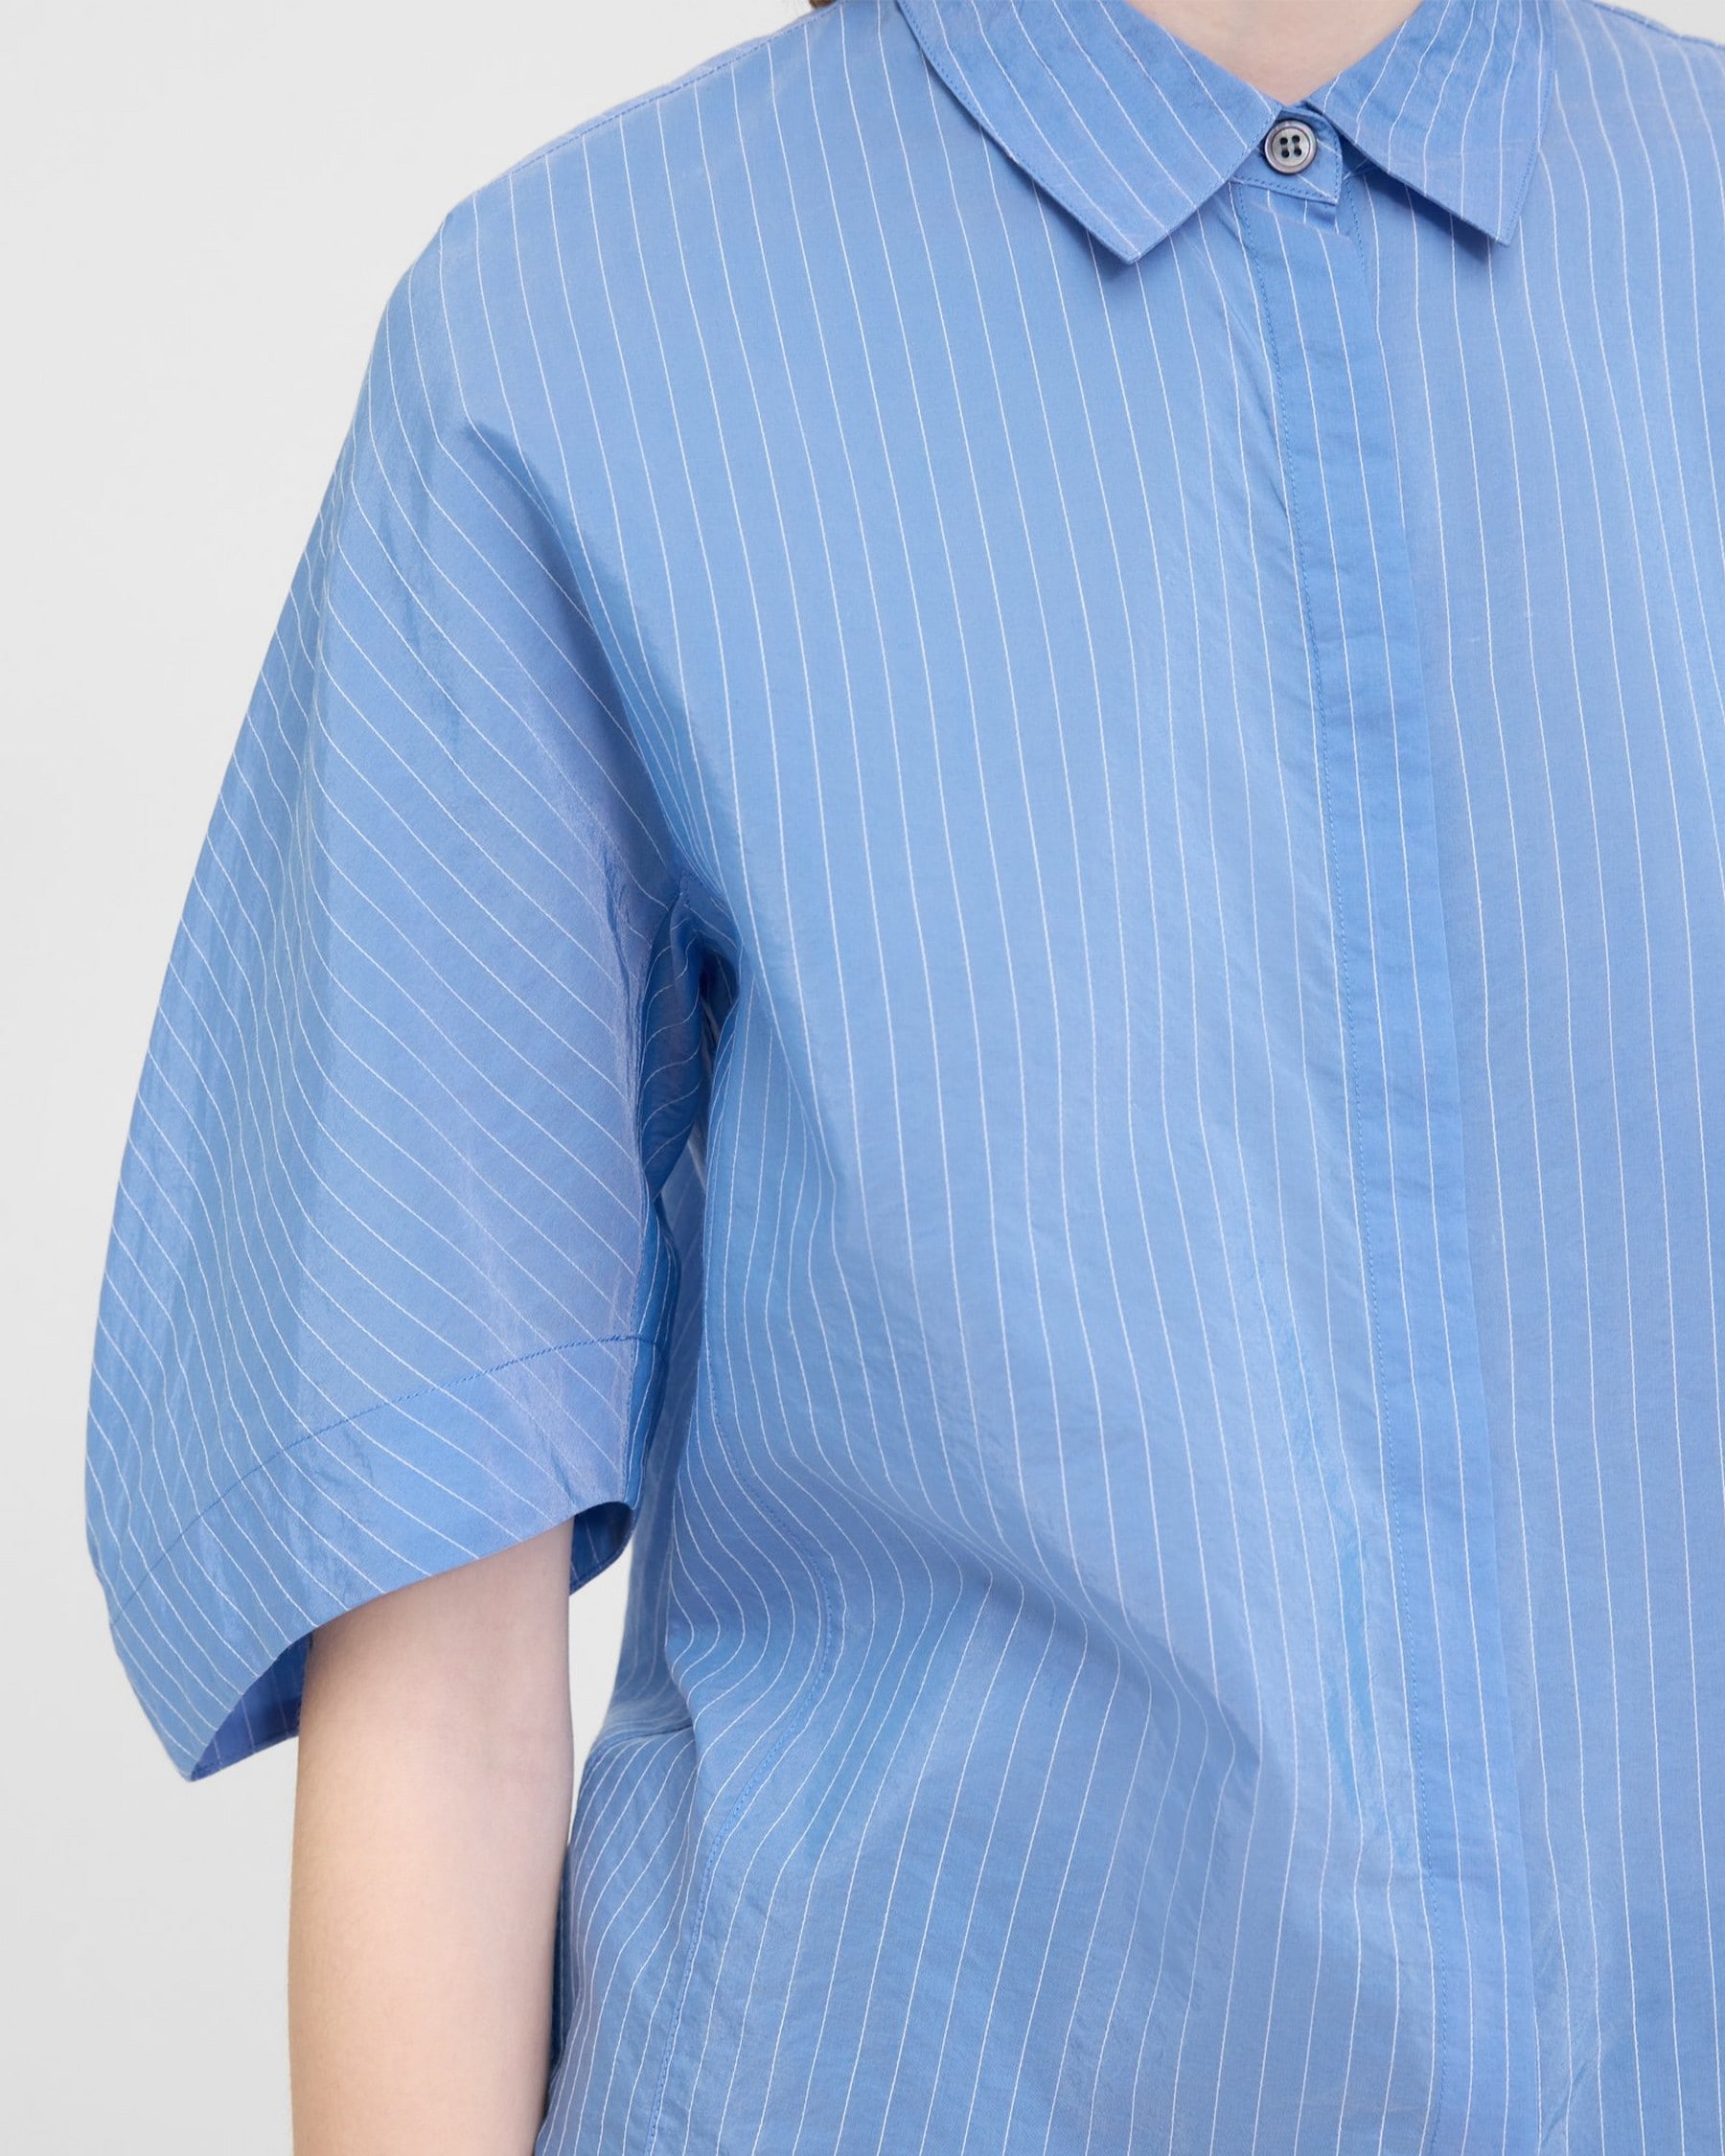 Striped Cotton-Blend Shirt